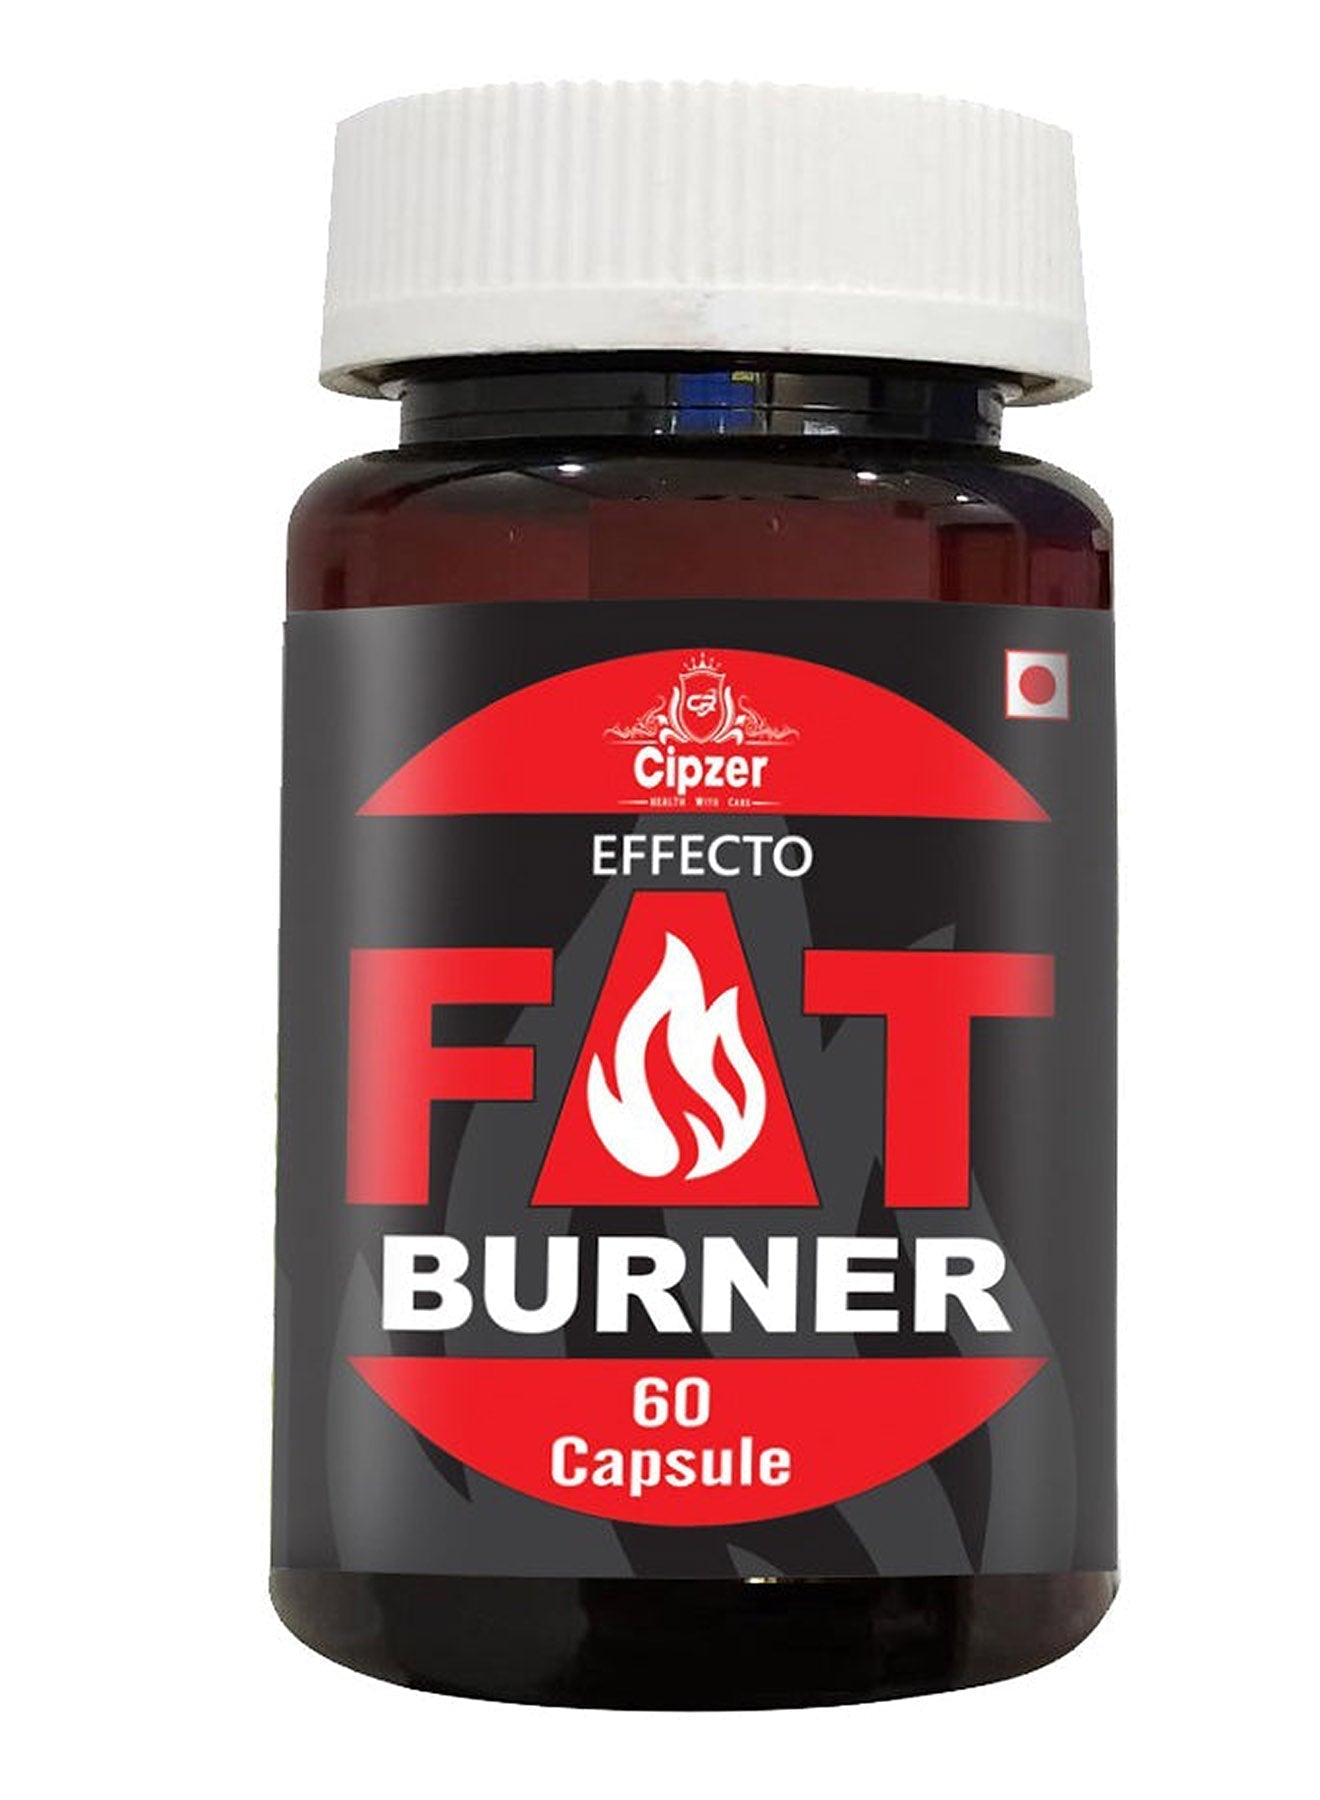 Cipzer Effecto FAT Burner 60 Capsules Value Pack of 12 